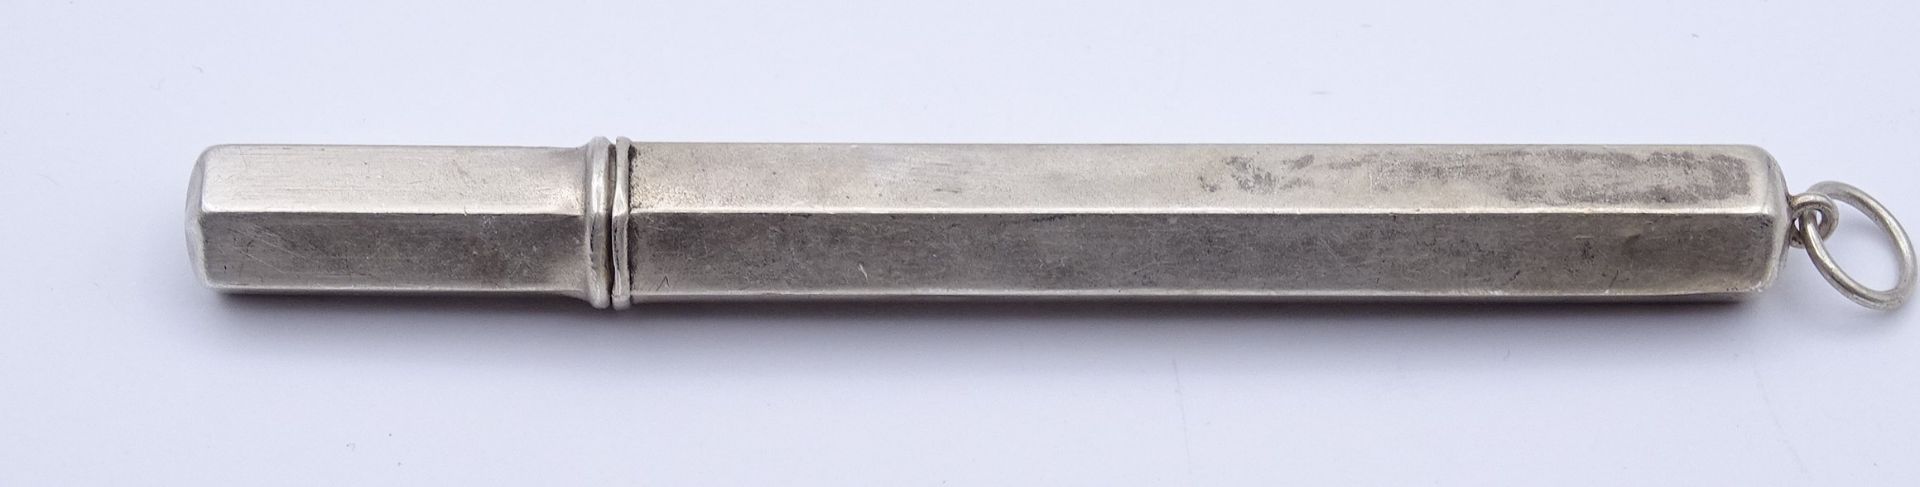 Silberquirl 0.800, L- 10,5cm, 8,6g. - Bild 4 aus 4